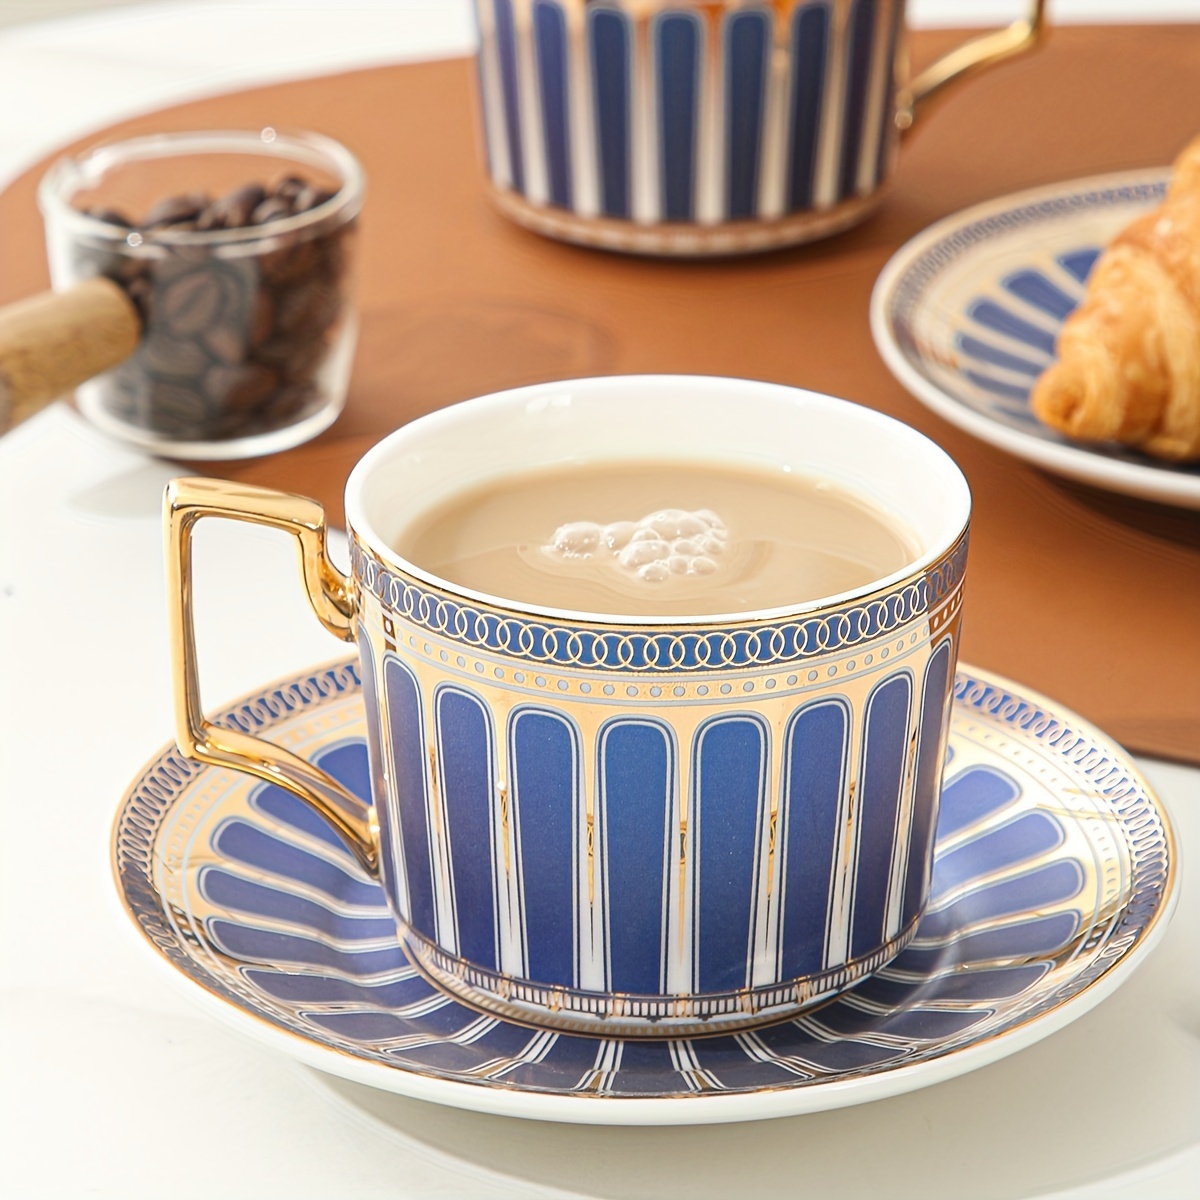 Coffee tea saucers porcelain coffee cup set vintage luxury english